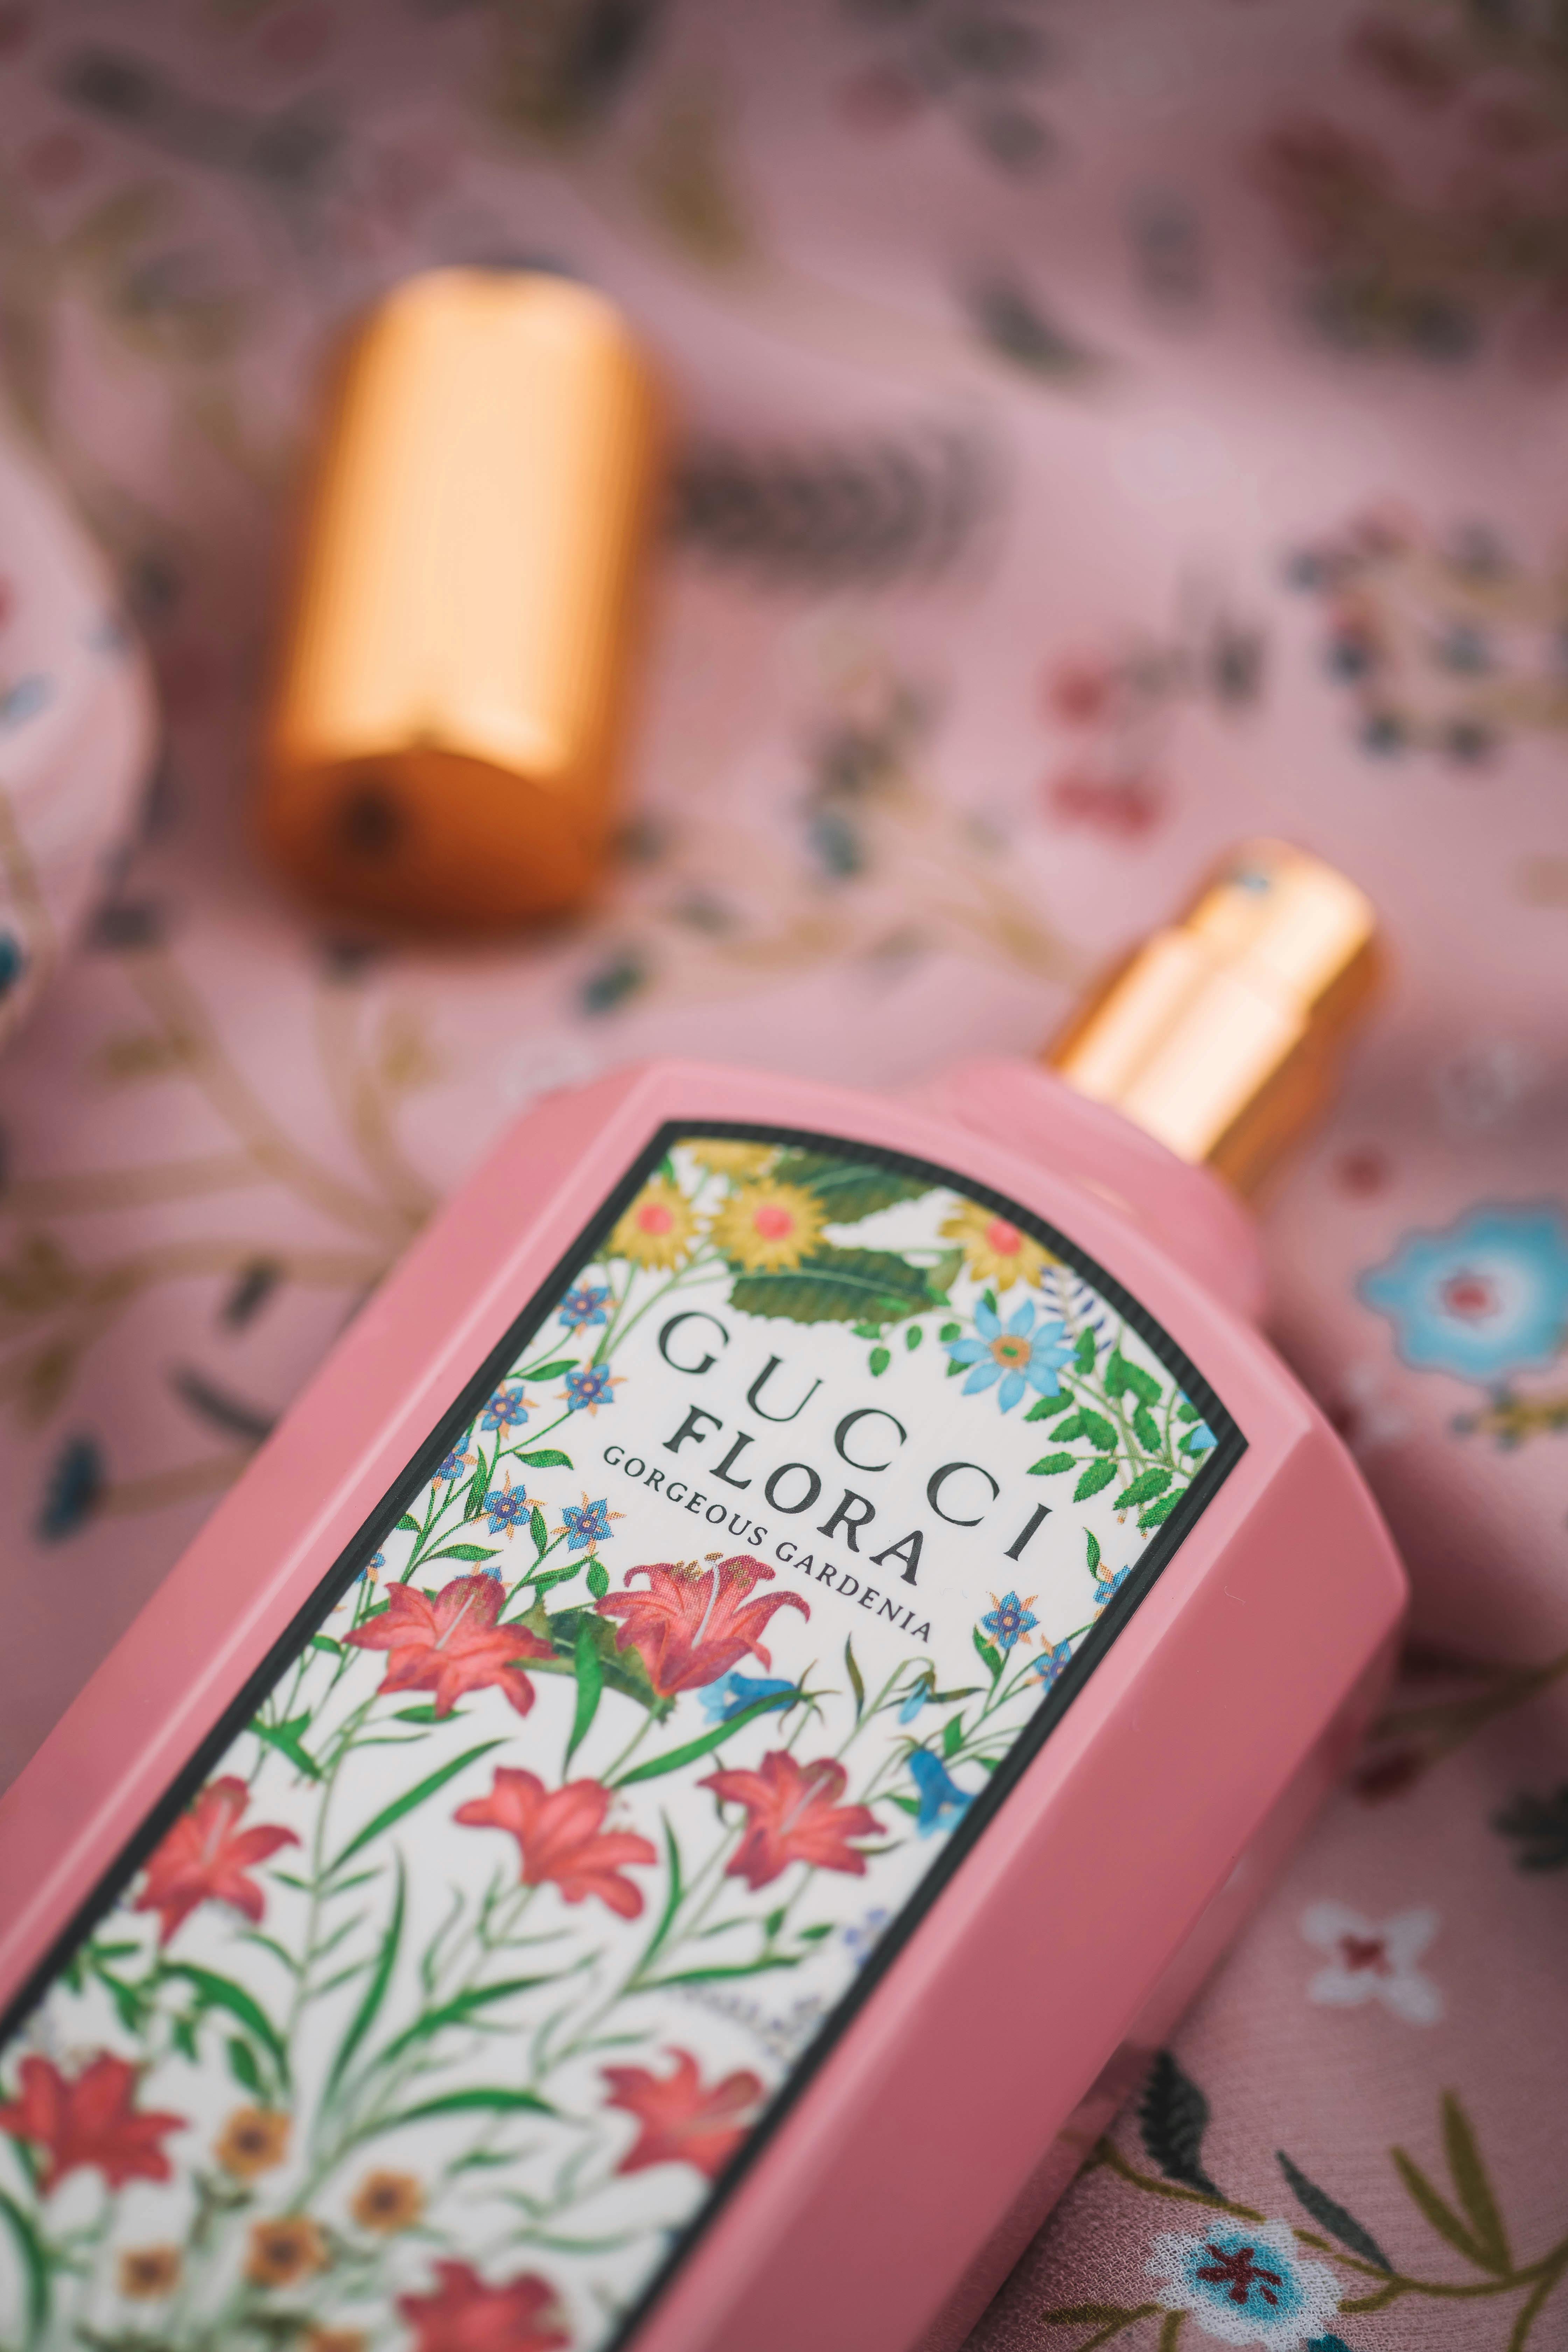 Download Pink Bloom Perfume Gucci 4k Wallpaper